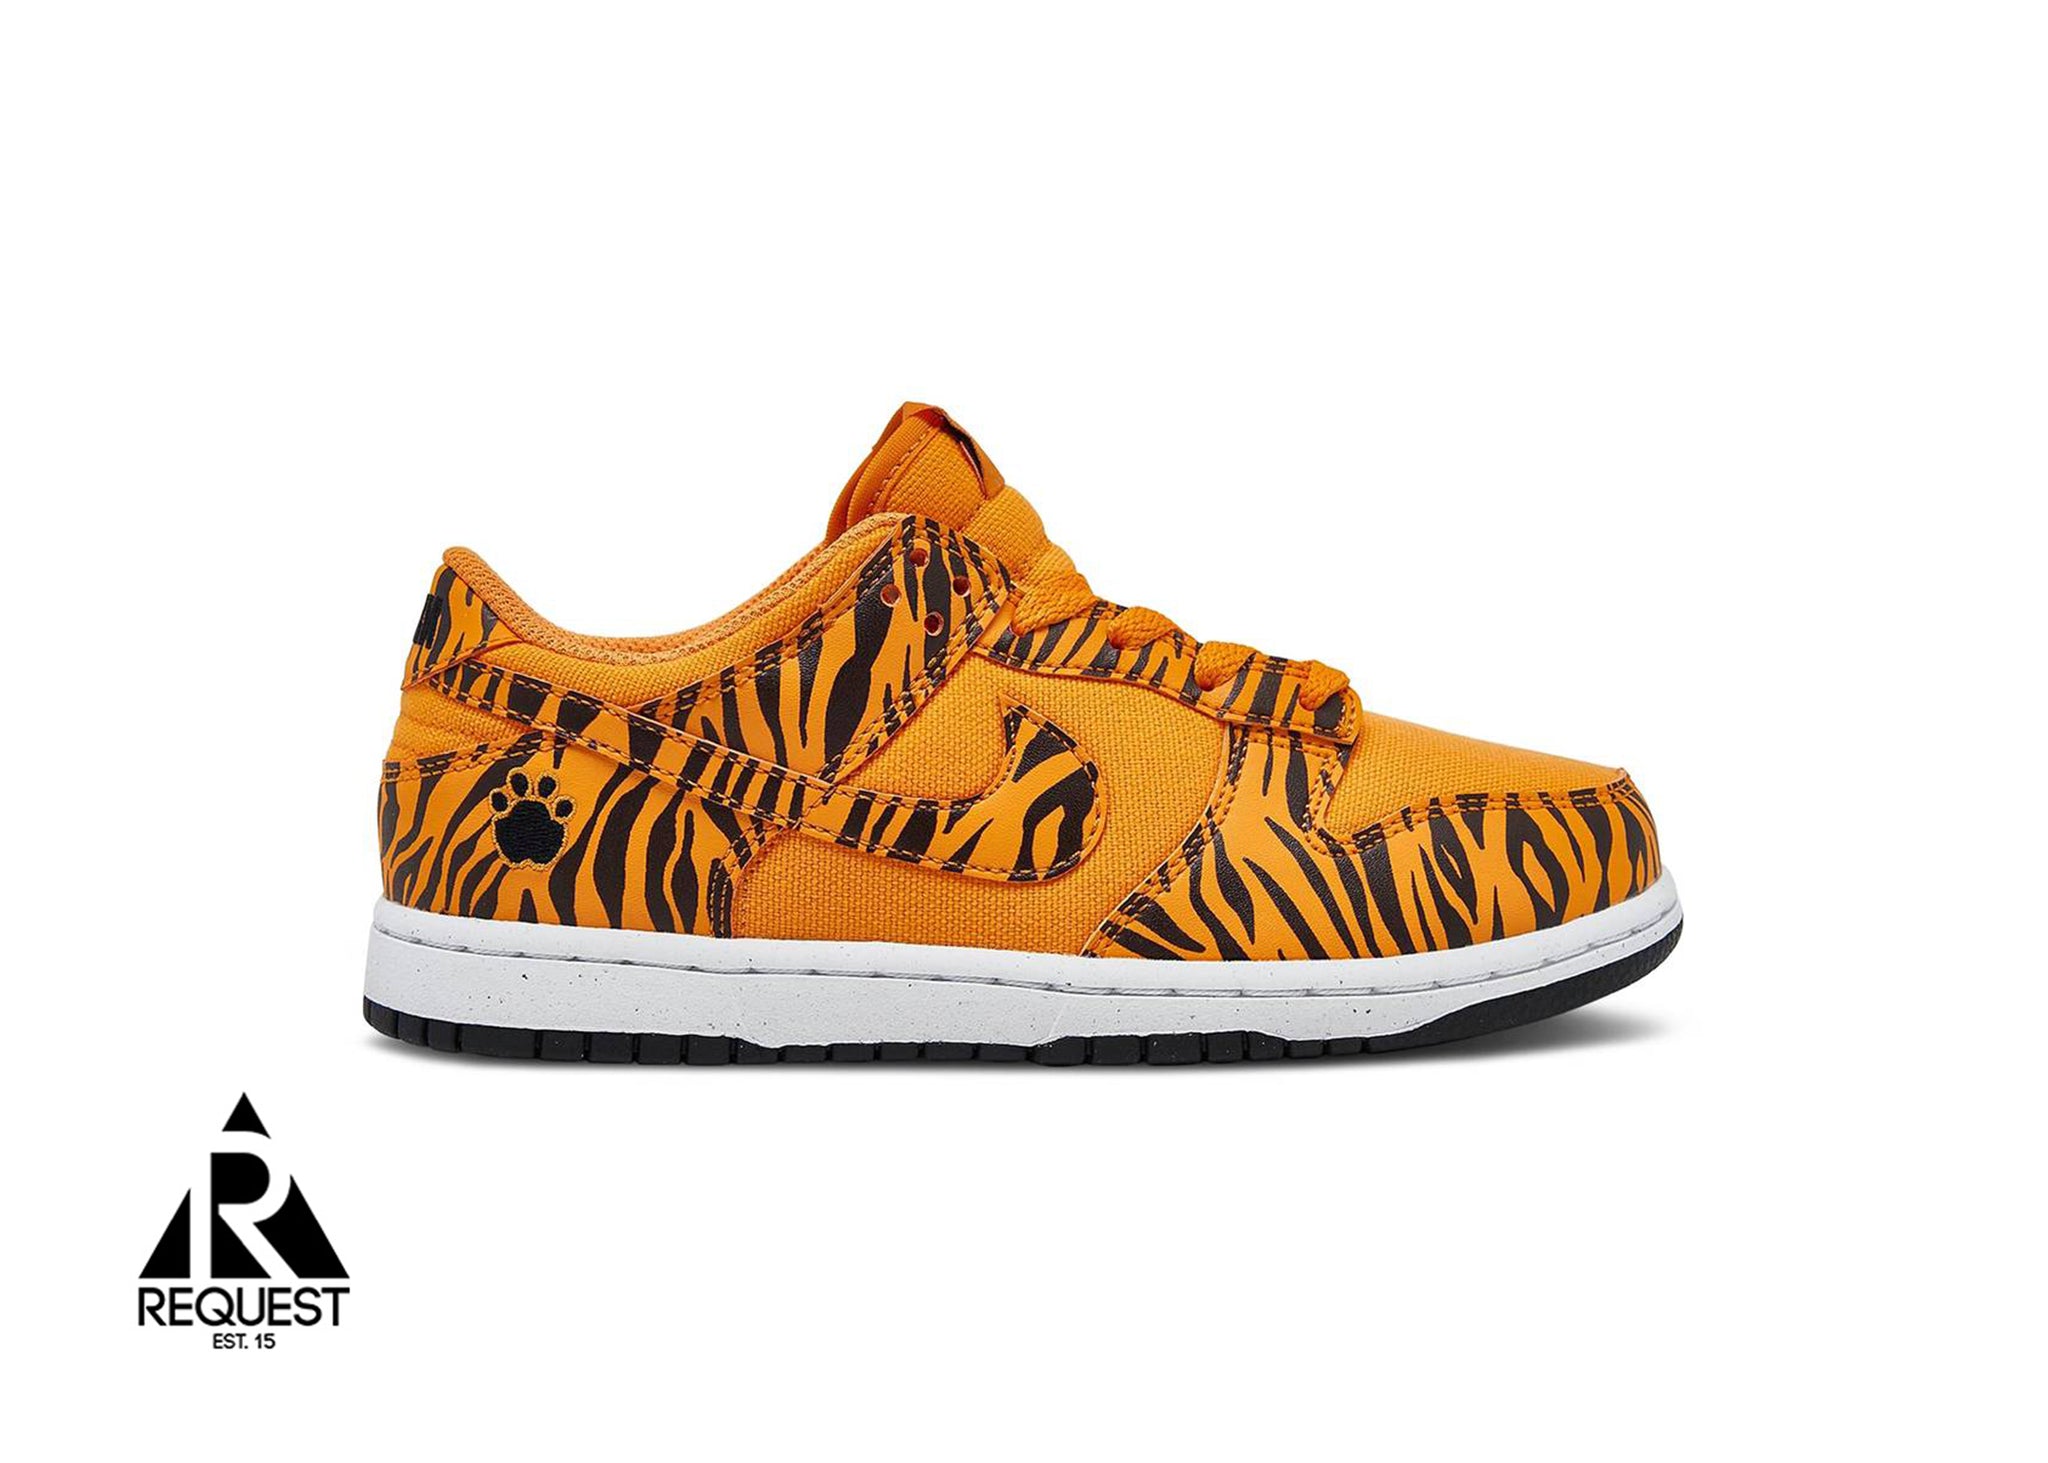 Gucci Slip On “Tiger” | Request